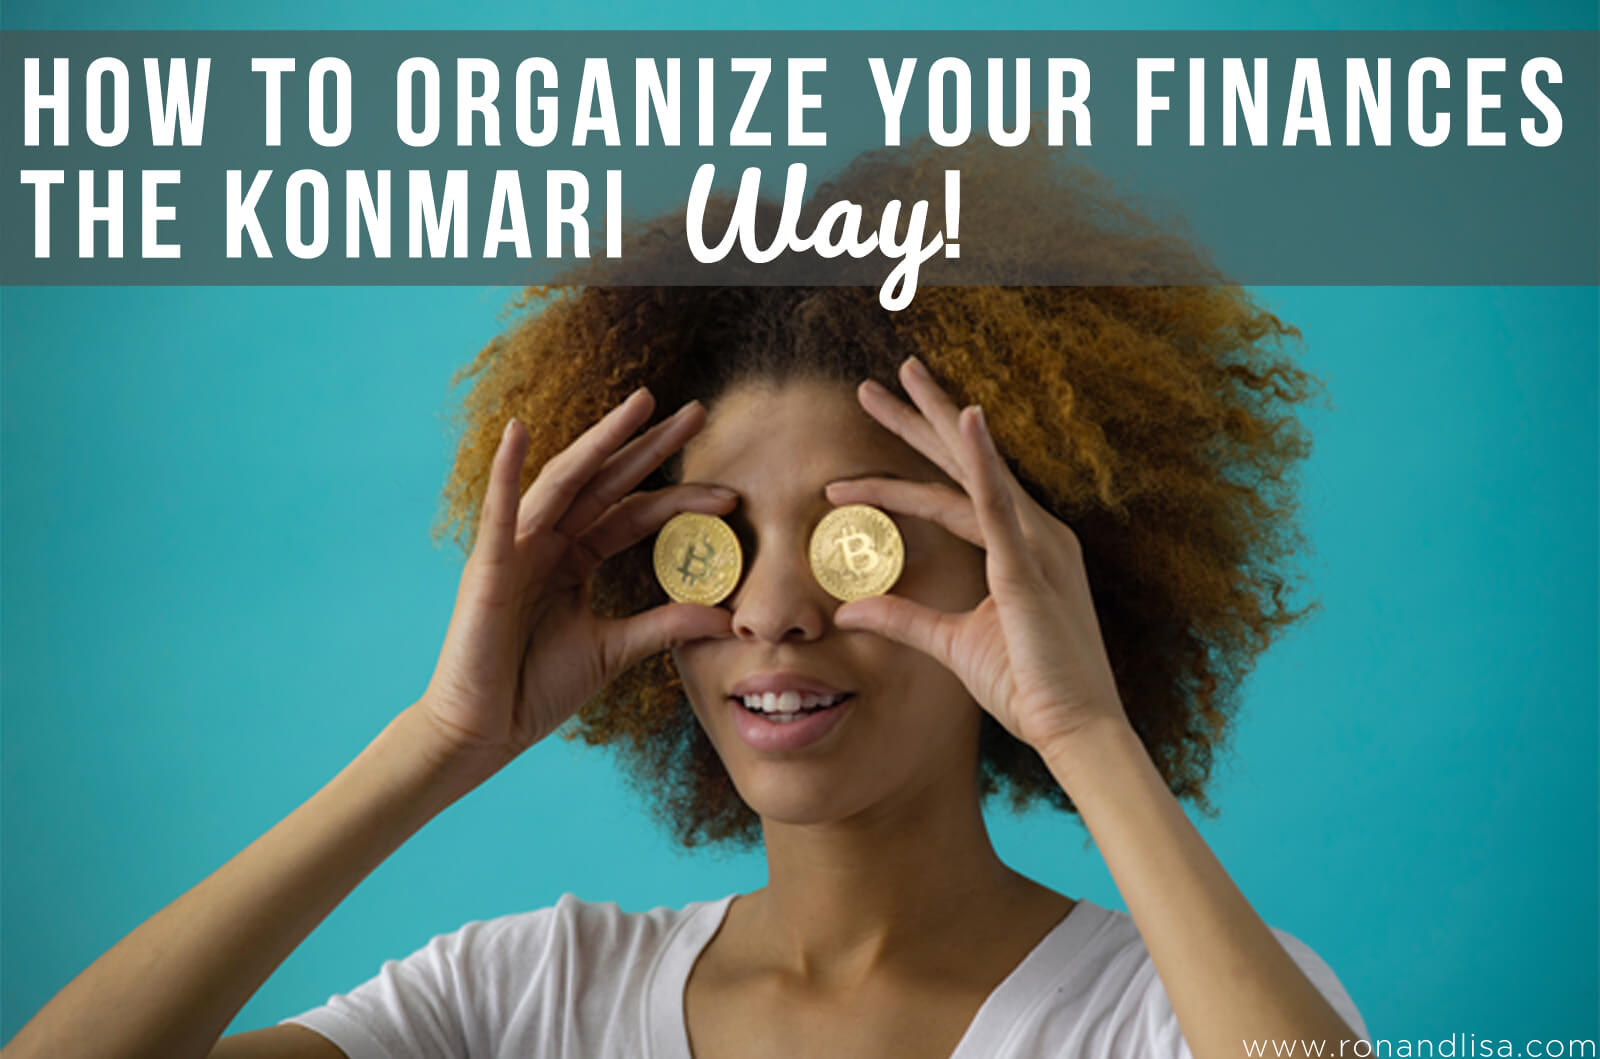 How To Organize Your Finances The Konmari Way!